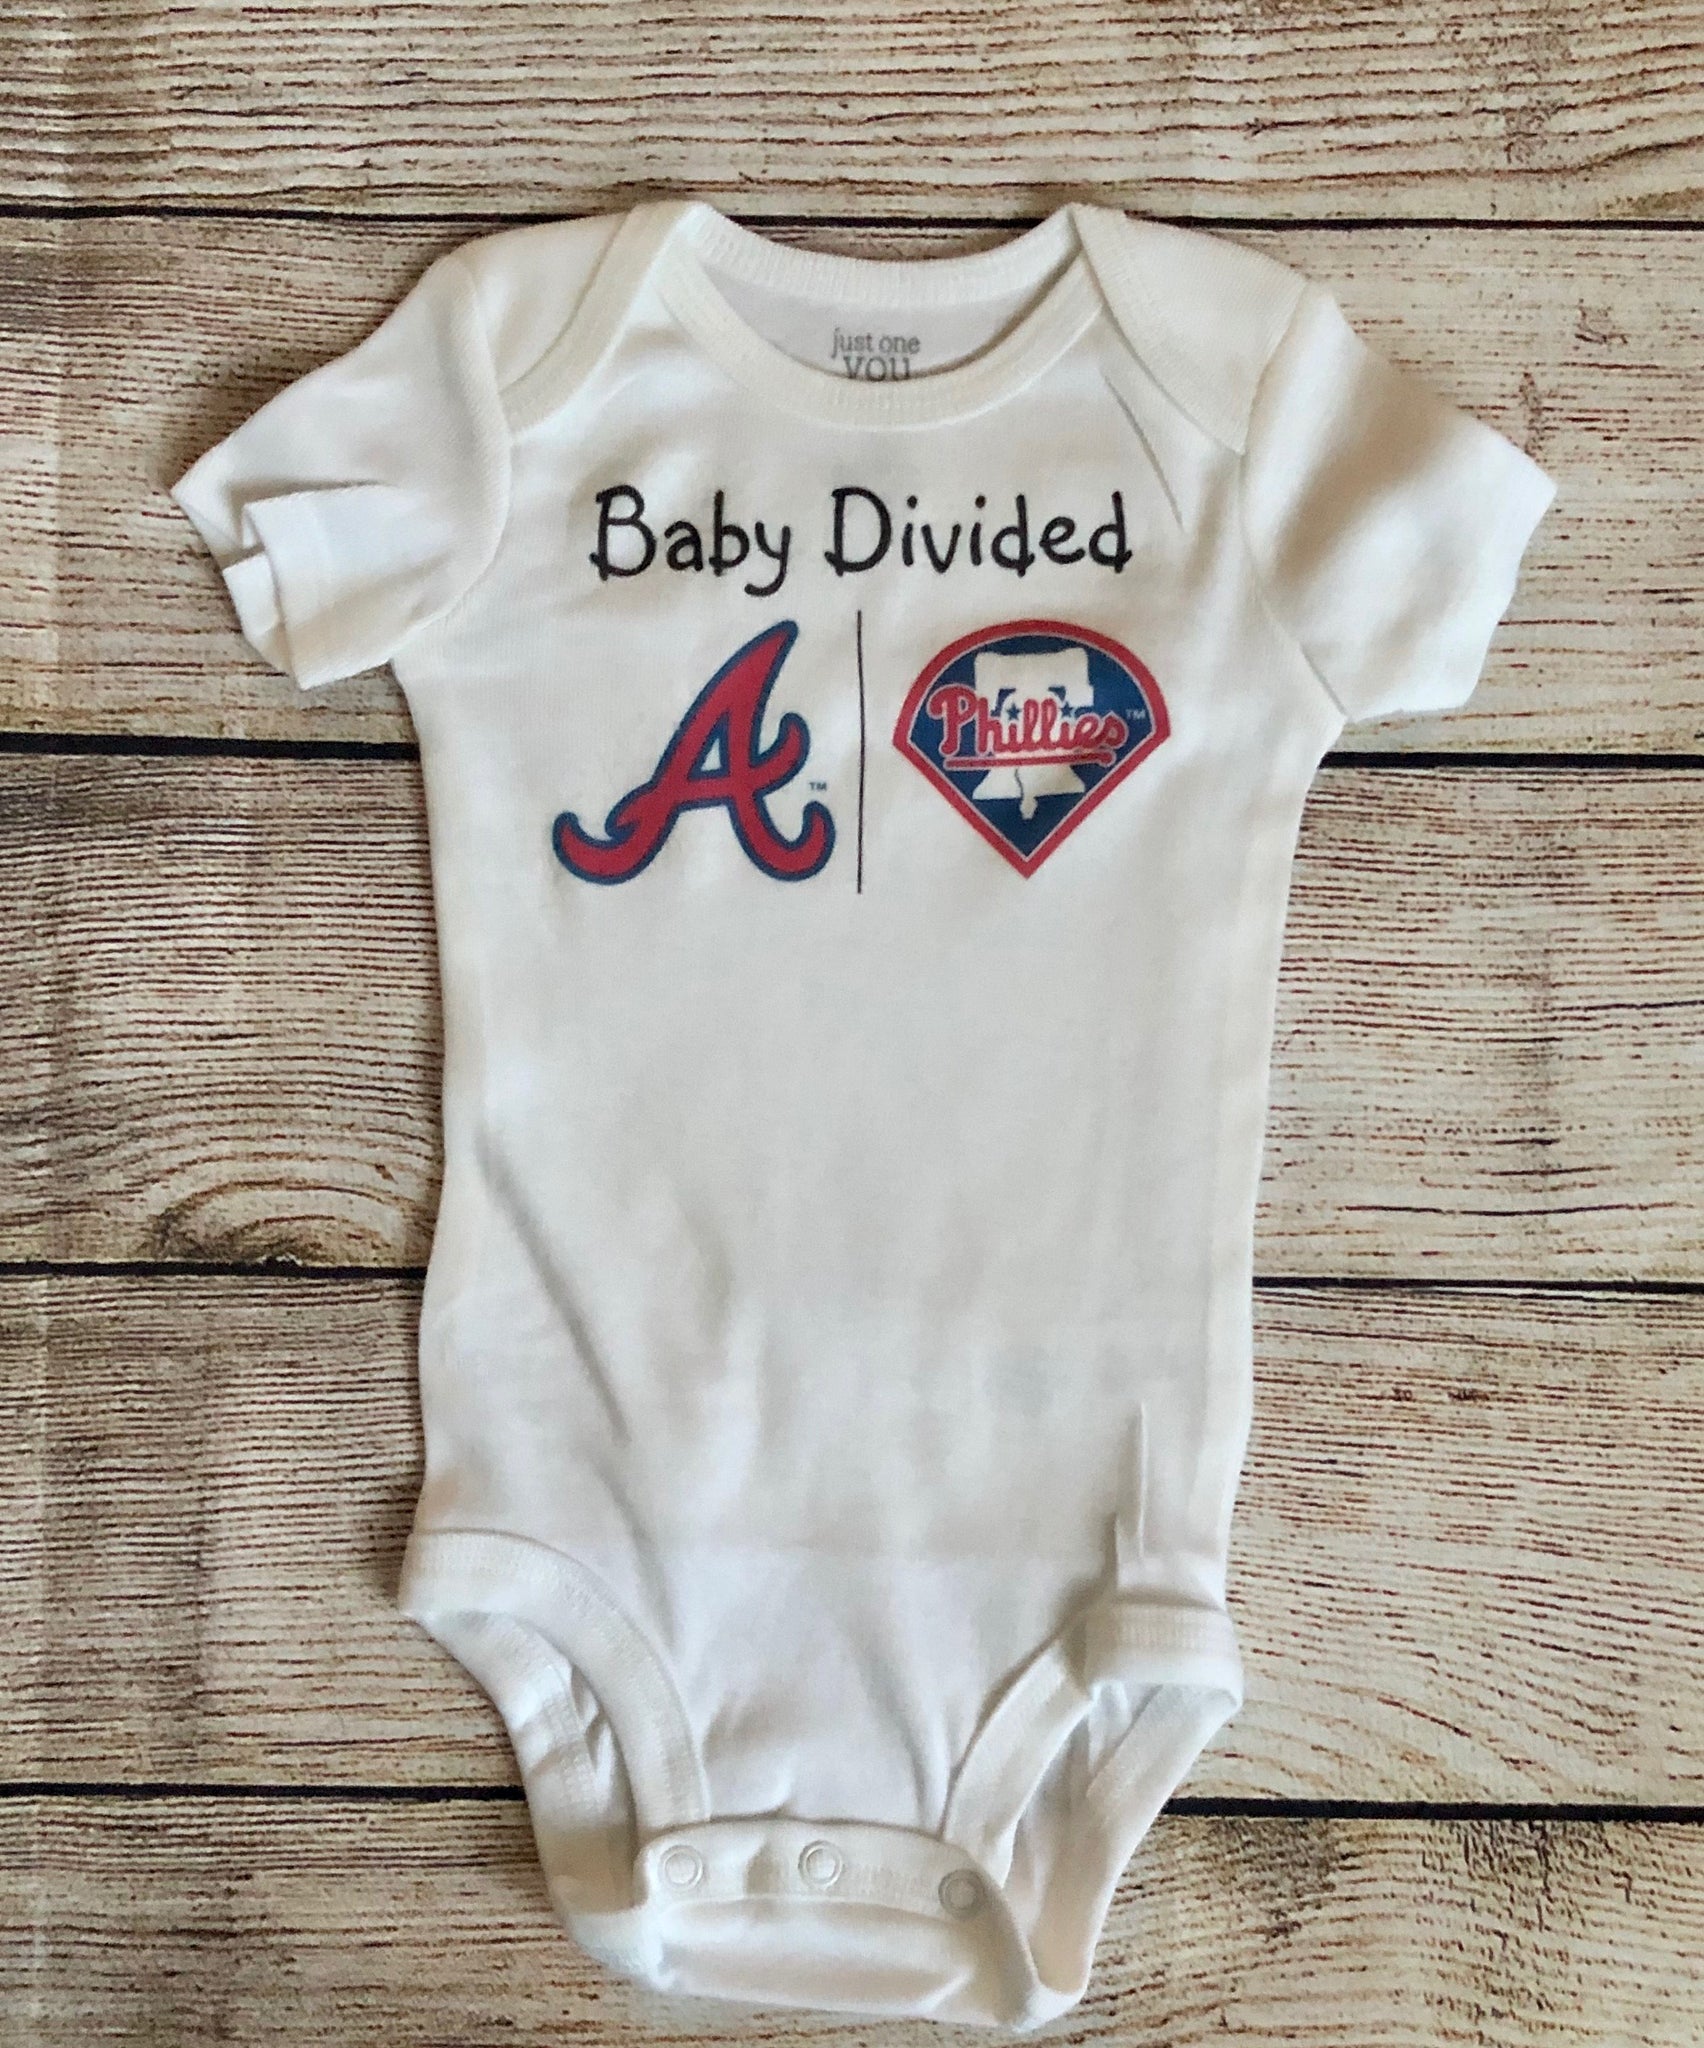 Braves infant/baby clothes Braves baseball baby gift Atlanta baseball baby  gift